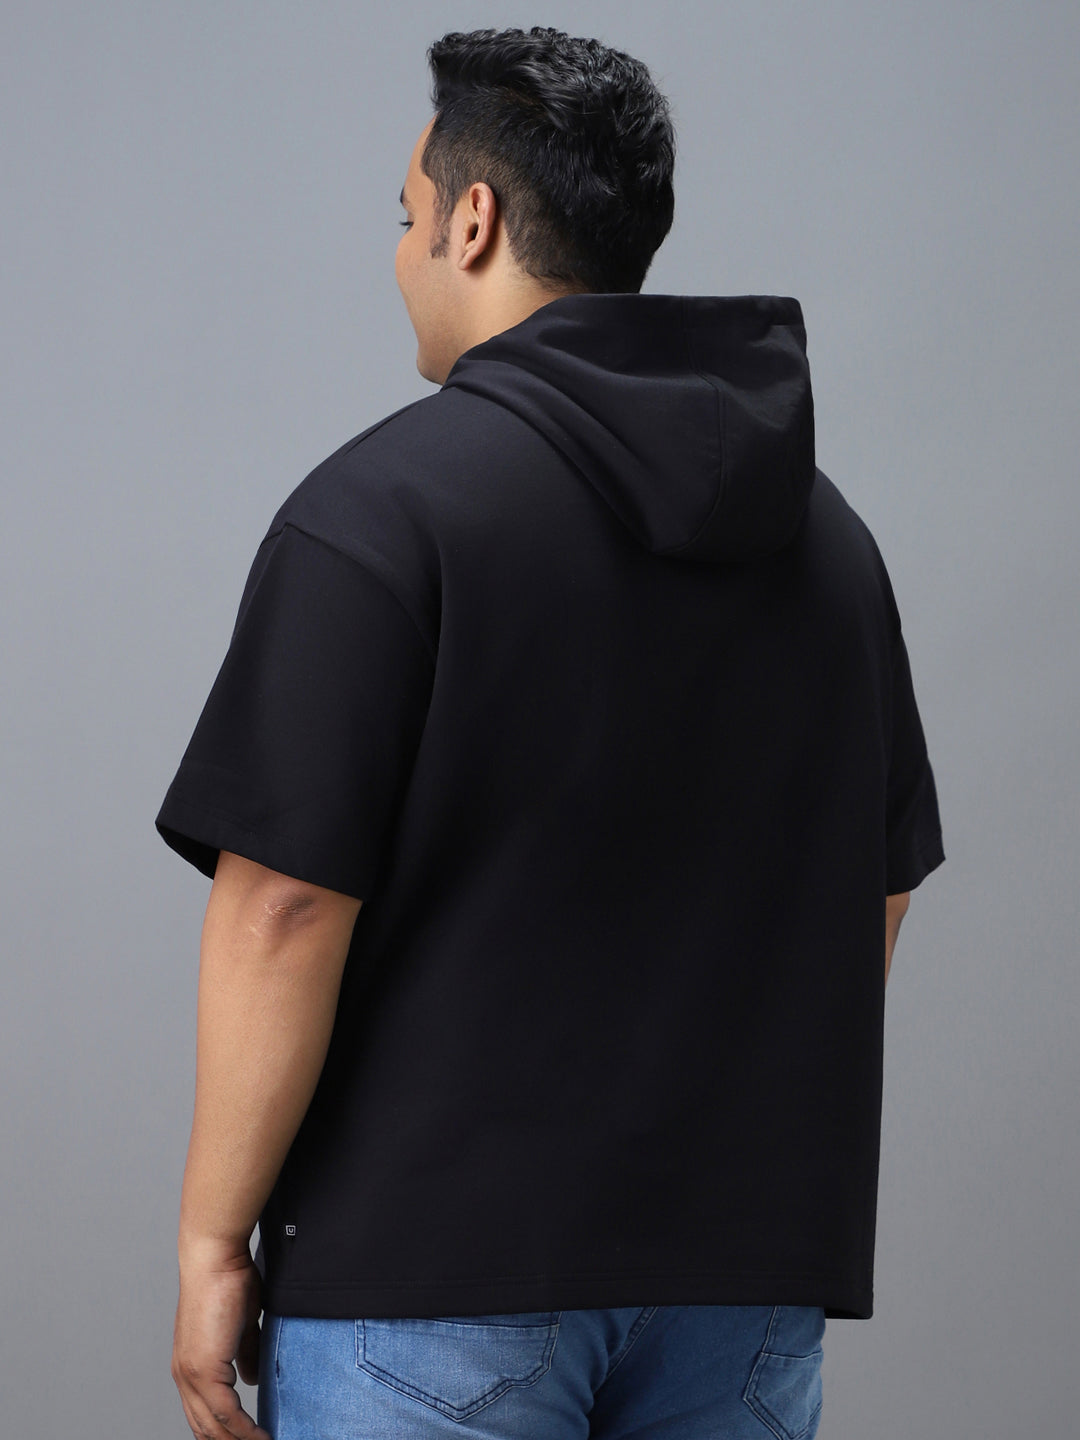 Plus Men's Black Cotton Solid Hooded Neck Sweatshirt